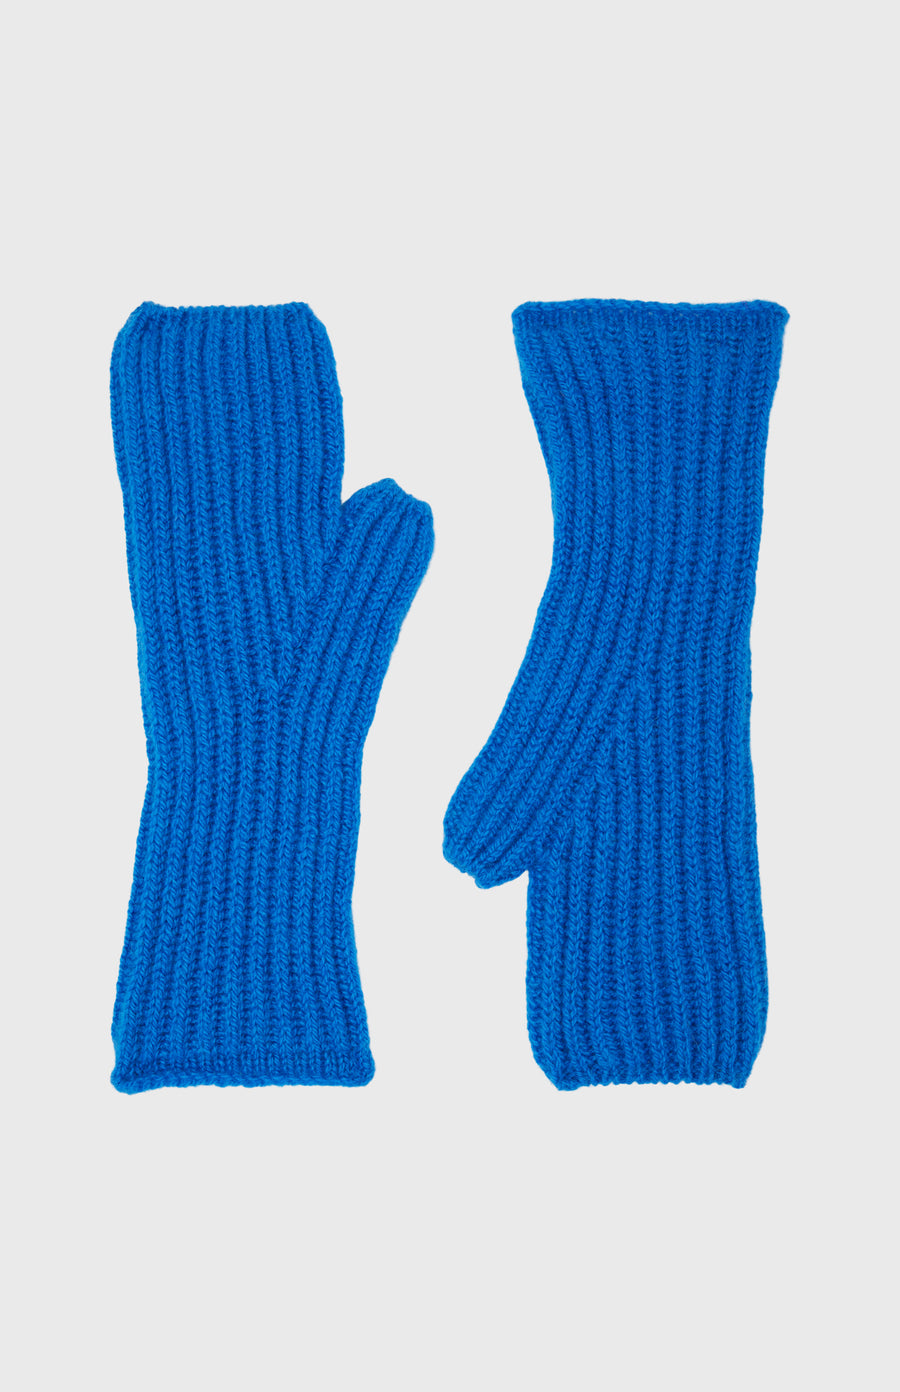 Fisherman's rib Knit Cashmere Wrist Warmers in Dark Blue - Pringle of Scotland